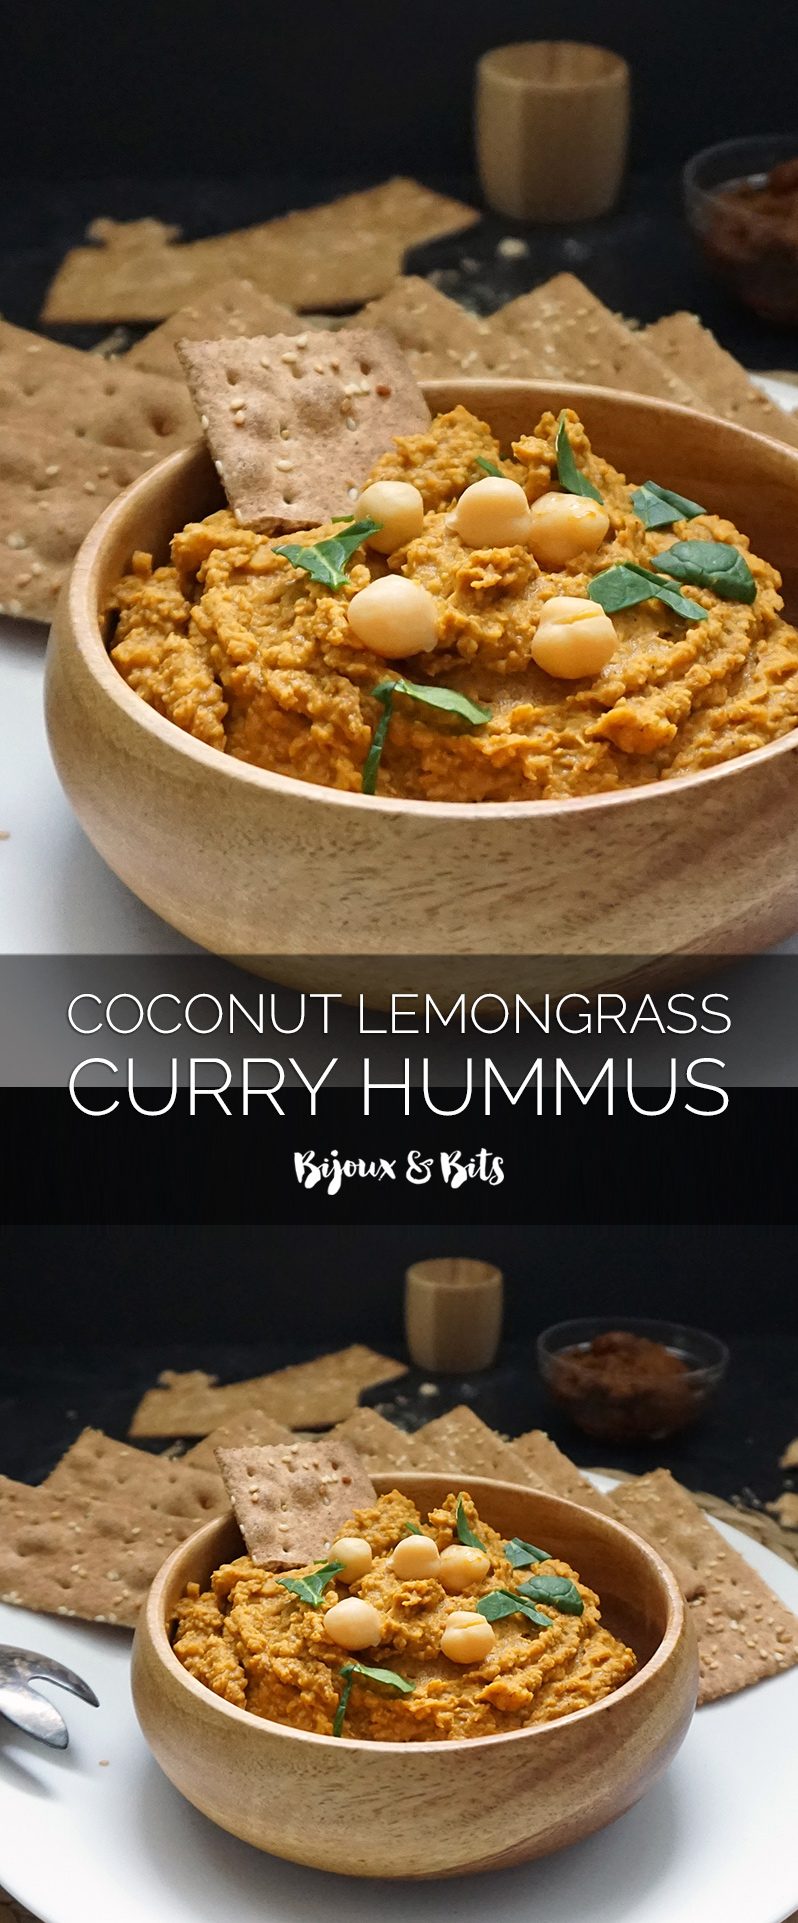 Coconut lemongrass curry hummus from @bijouxandbits